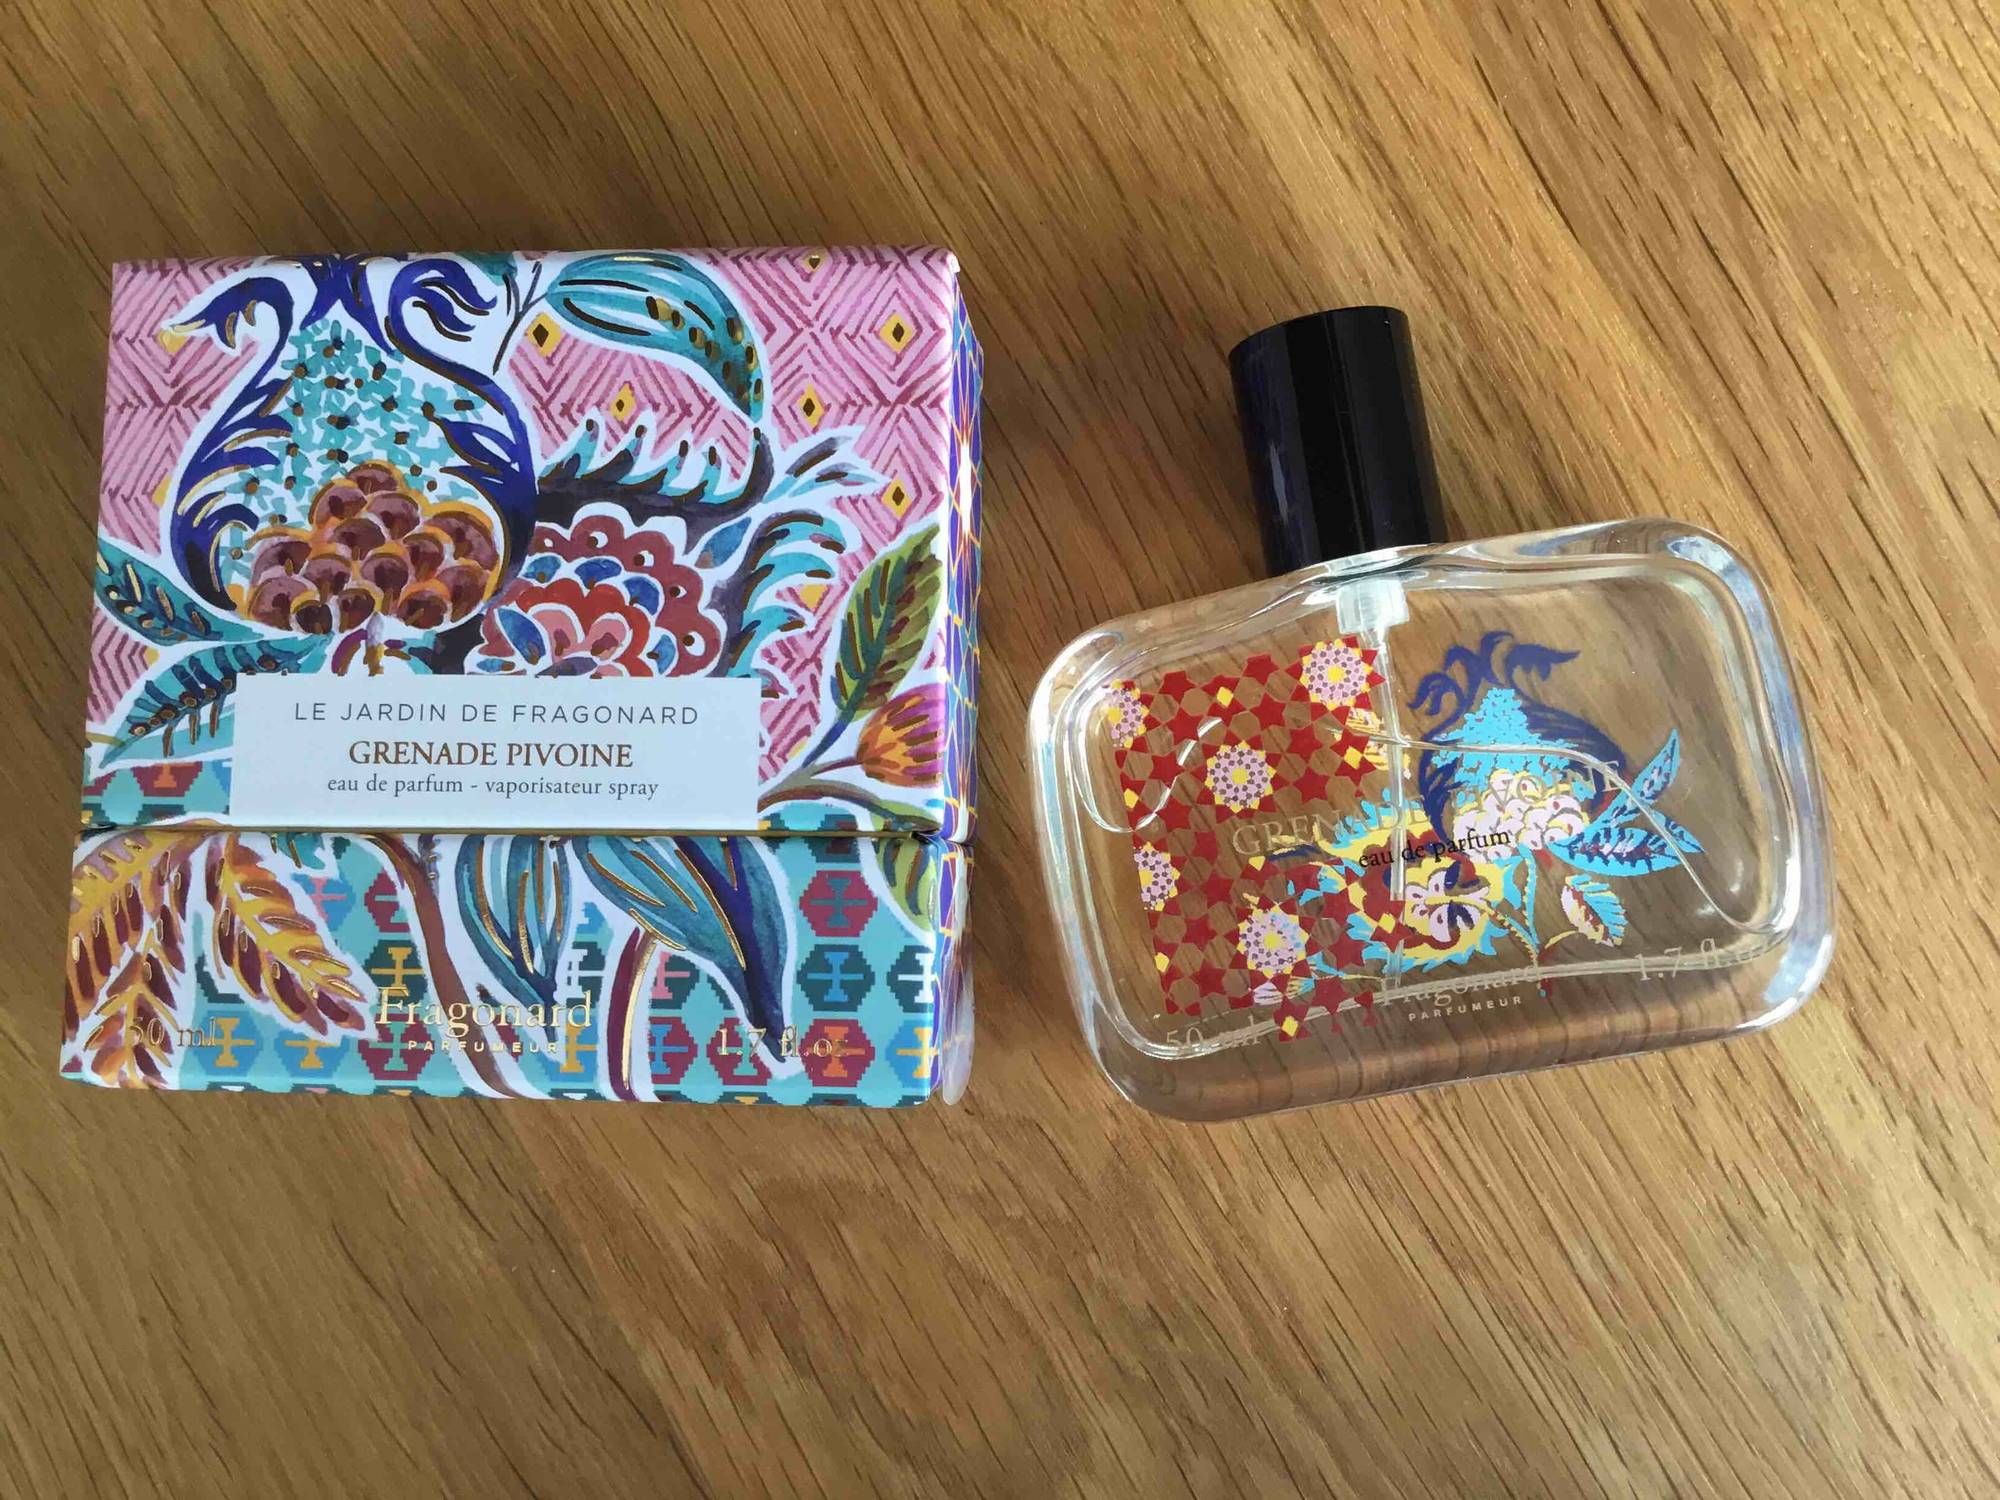 FRAGONARD PARFUMEUR - Le Jardin de Fragonard - Grenade pivoine eau de parfum